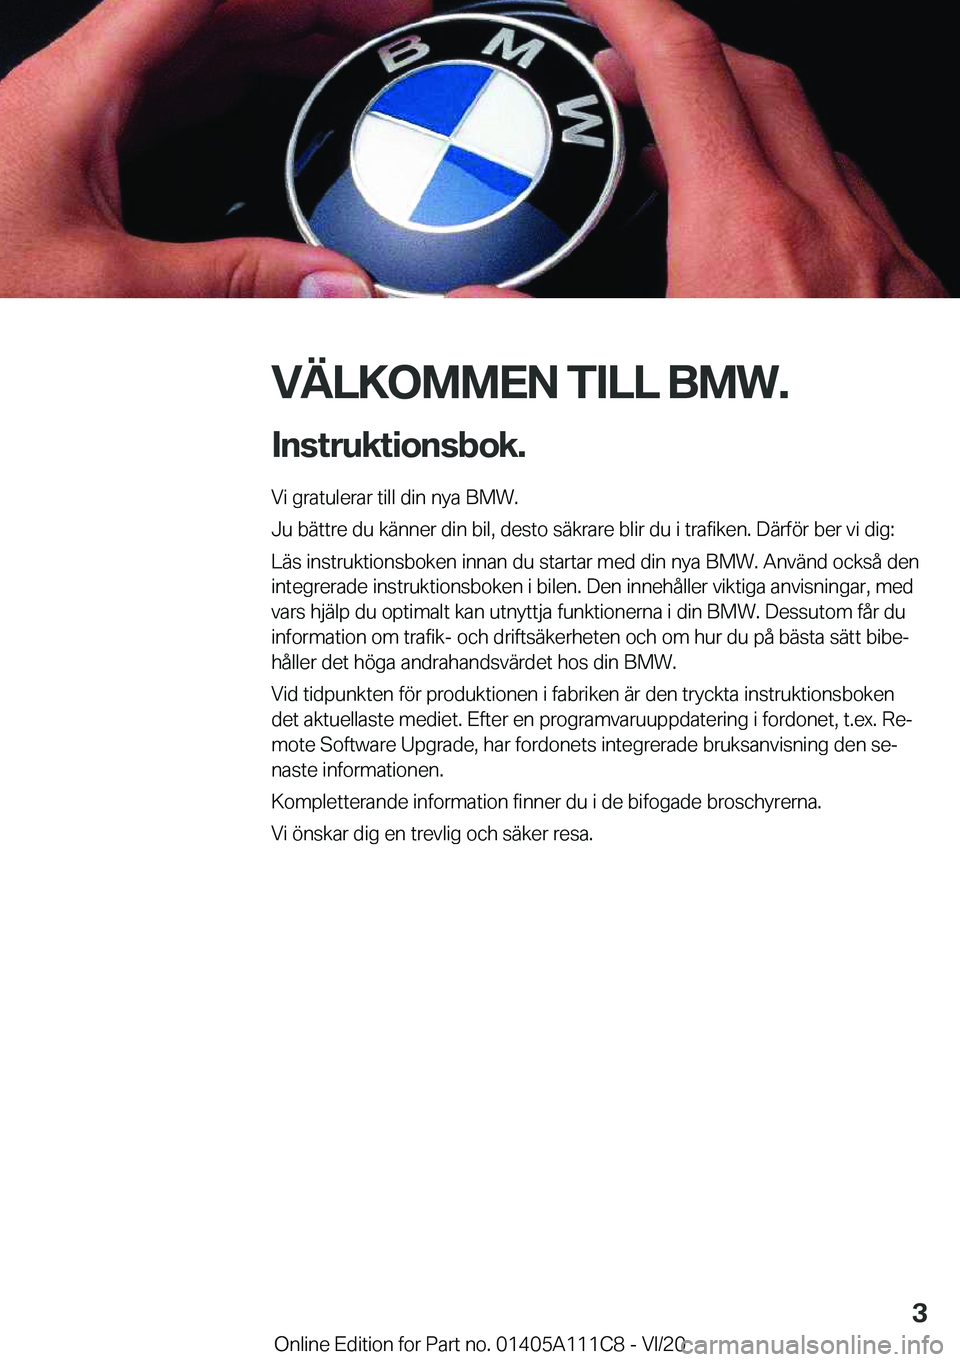 BMW 3 SERIES SEDAN PLUG-IN HYBRID 2021  InstruktionsbÖcker (in Swedish) �V�Ä�L�K�O�M�M�E�N��T�I�L�L��B�M�W�.�I�n�s�t�r�u�k�t�i�o�n�s�b�o�k�.
�V�i��g�r�a�t�u�l�e�r�a�r��t�i�l�l��d�i�n��n�y�a��B�M�W�.
�J�u��b�ä�t�t�r�e��d�u��k�ä�n�n�e�r��d�i�n��b�i�l�,��d�e�